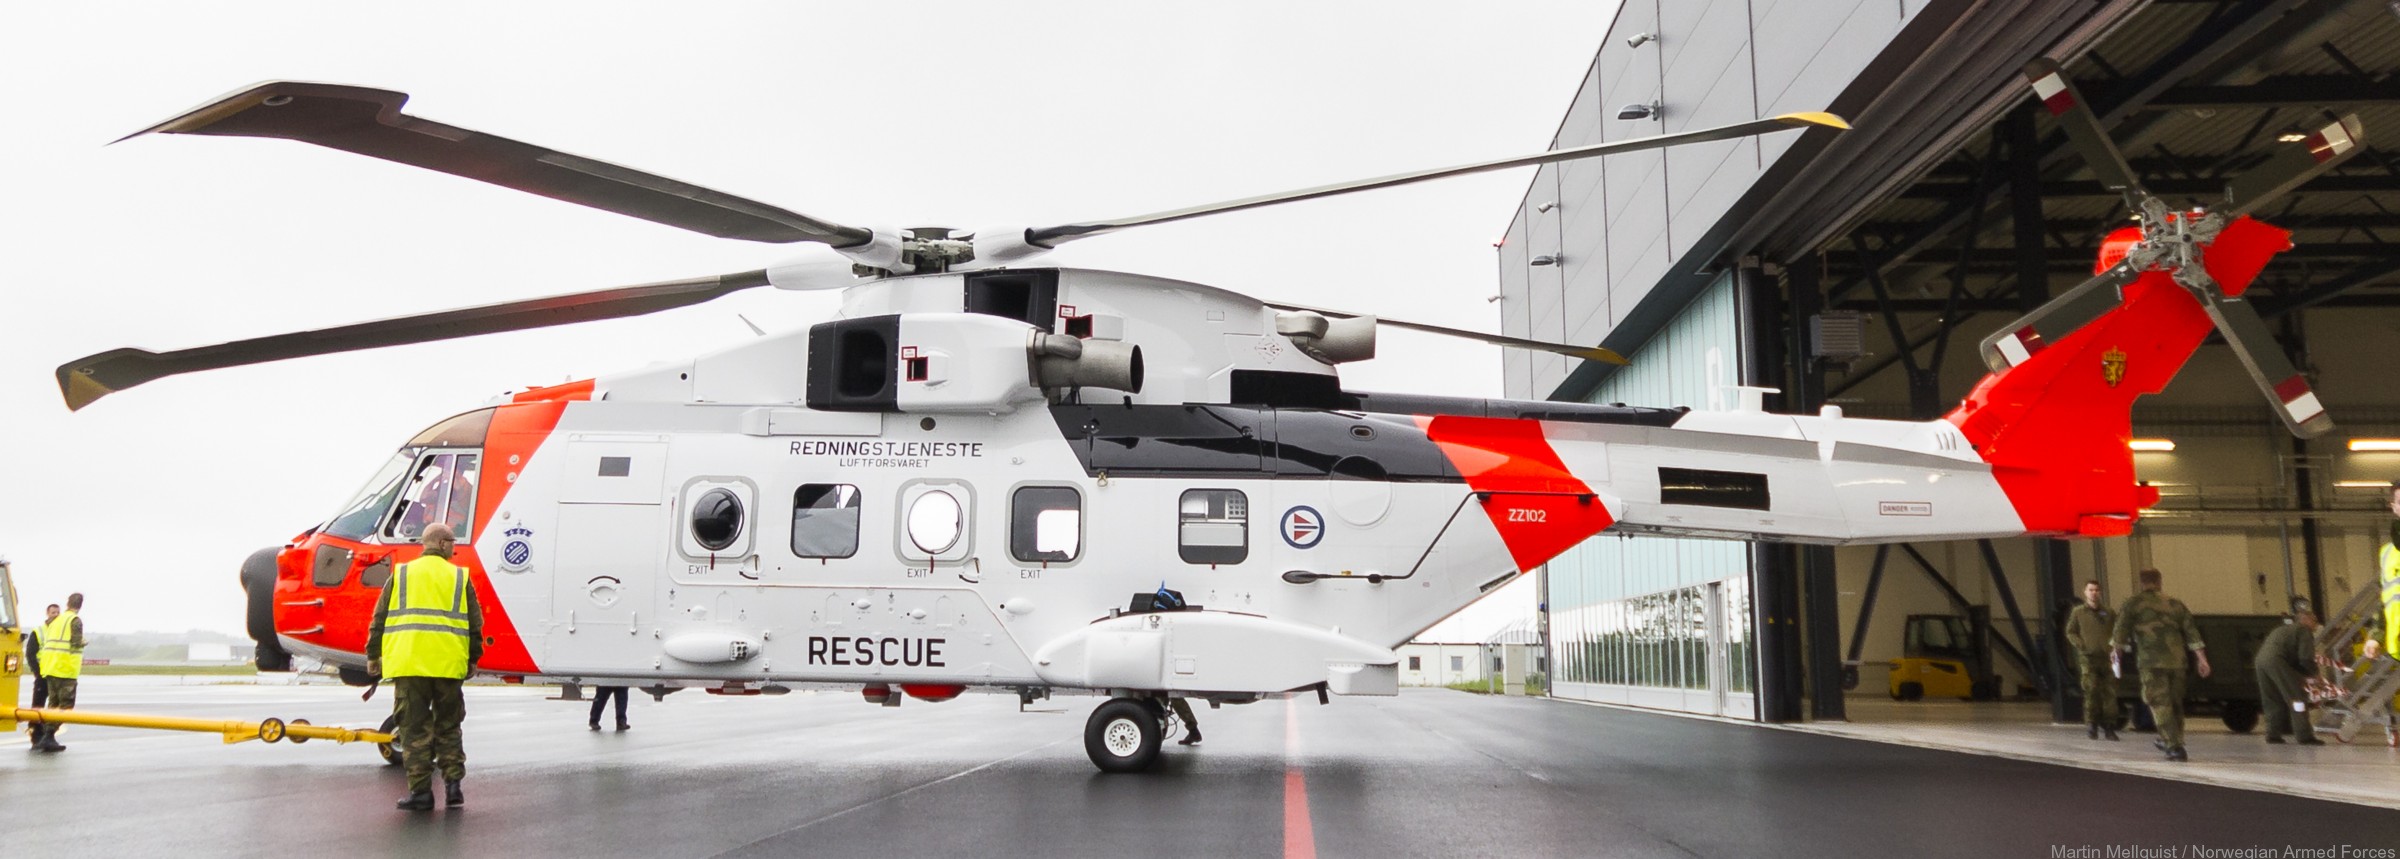 agusta westland aw101 sar helicopter royal norwegian air force luftforsvaret rescue 04